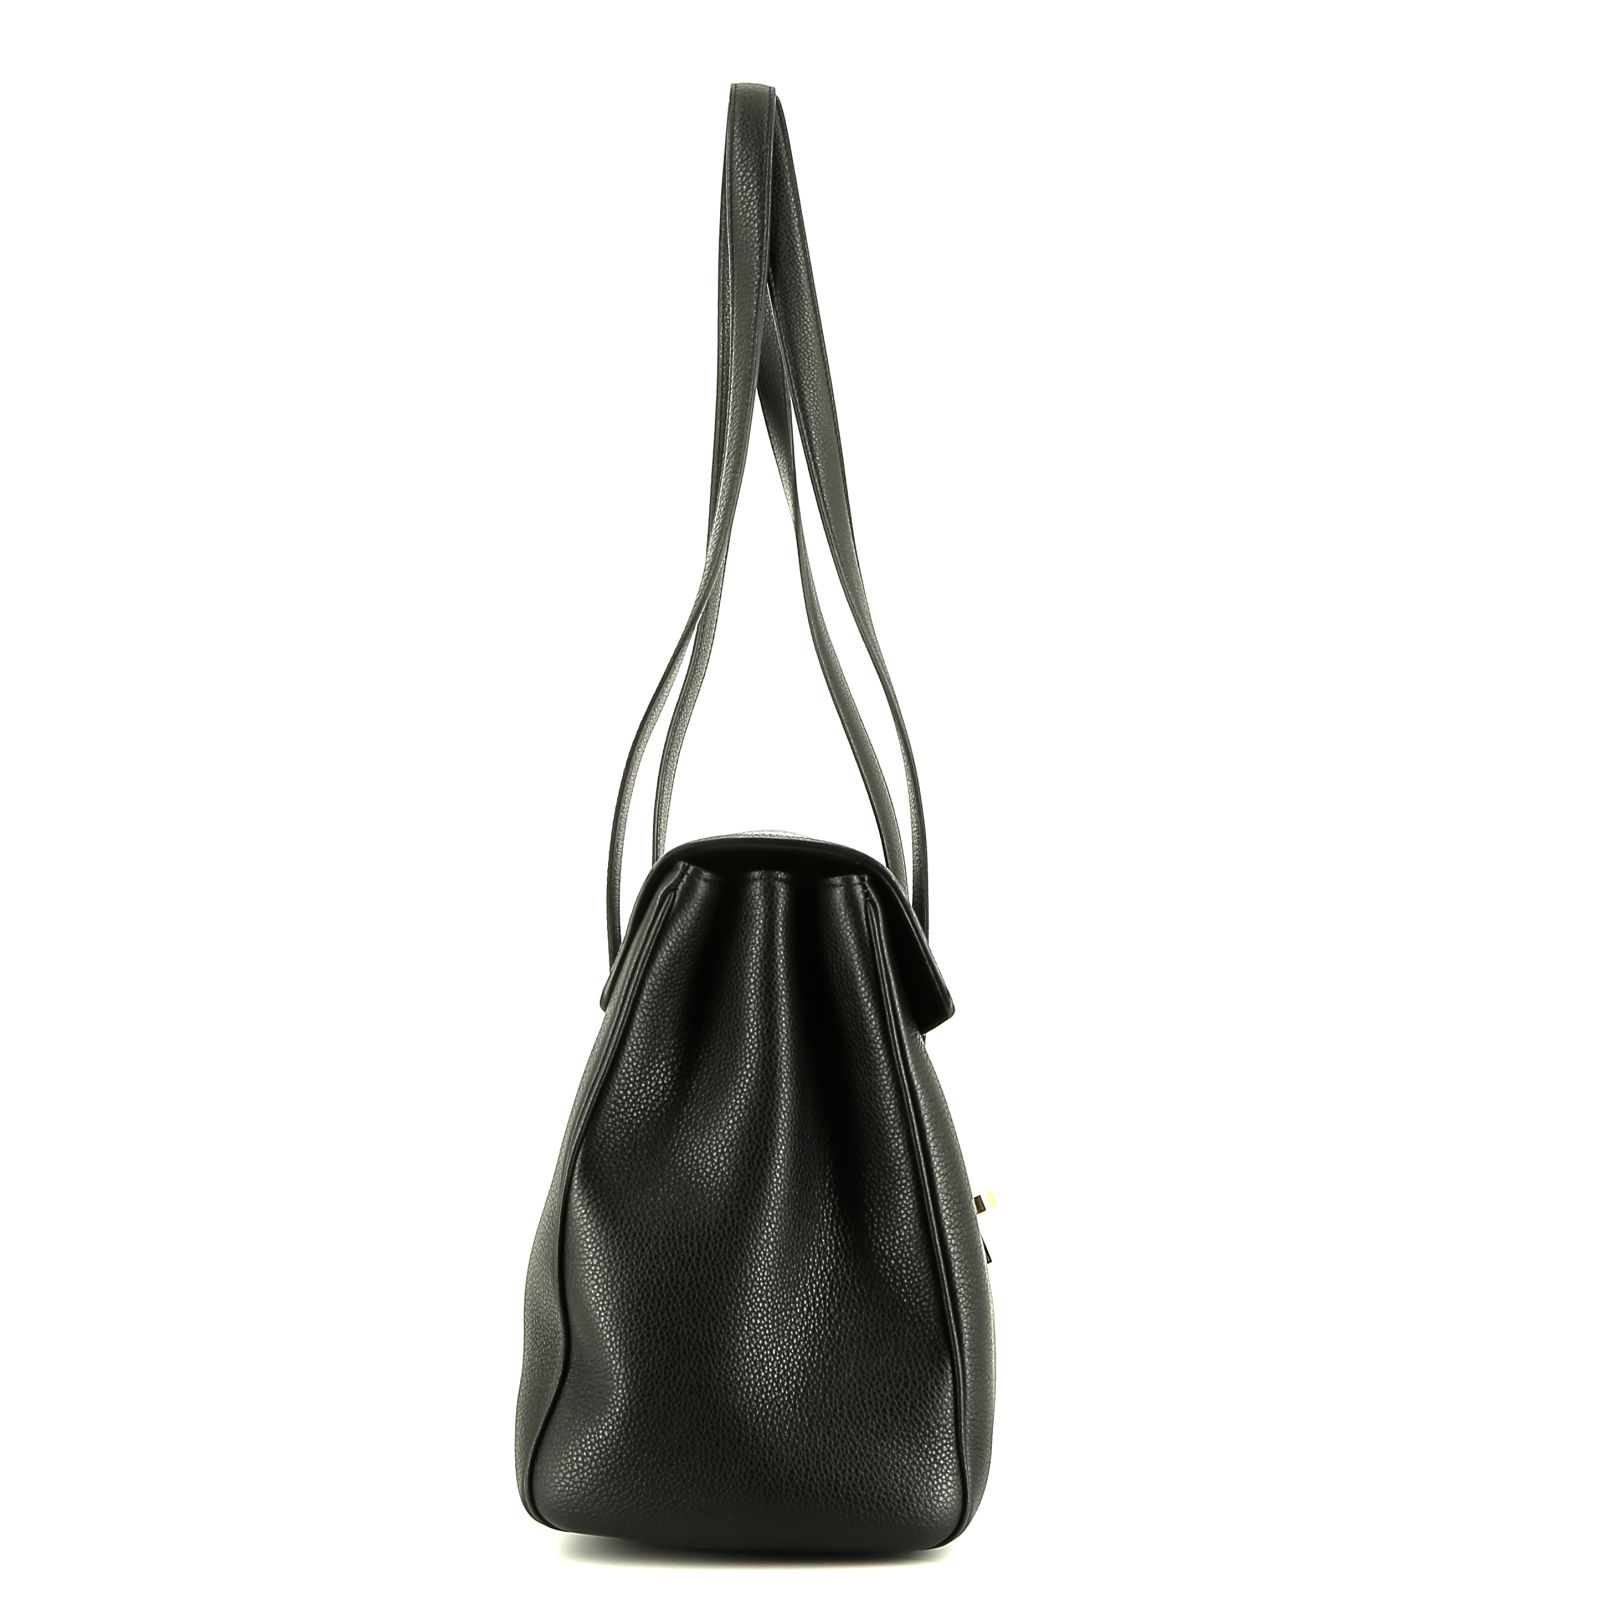 Sac 16 Handbag In Black Grained Leather